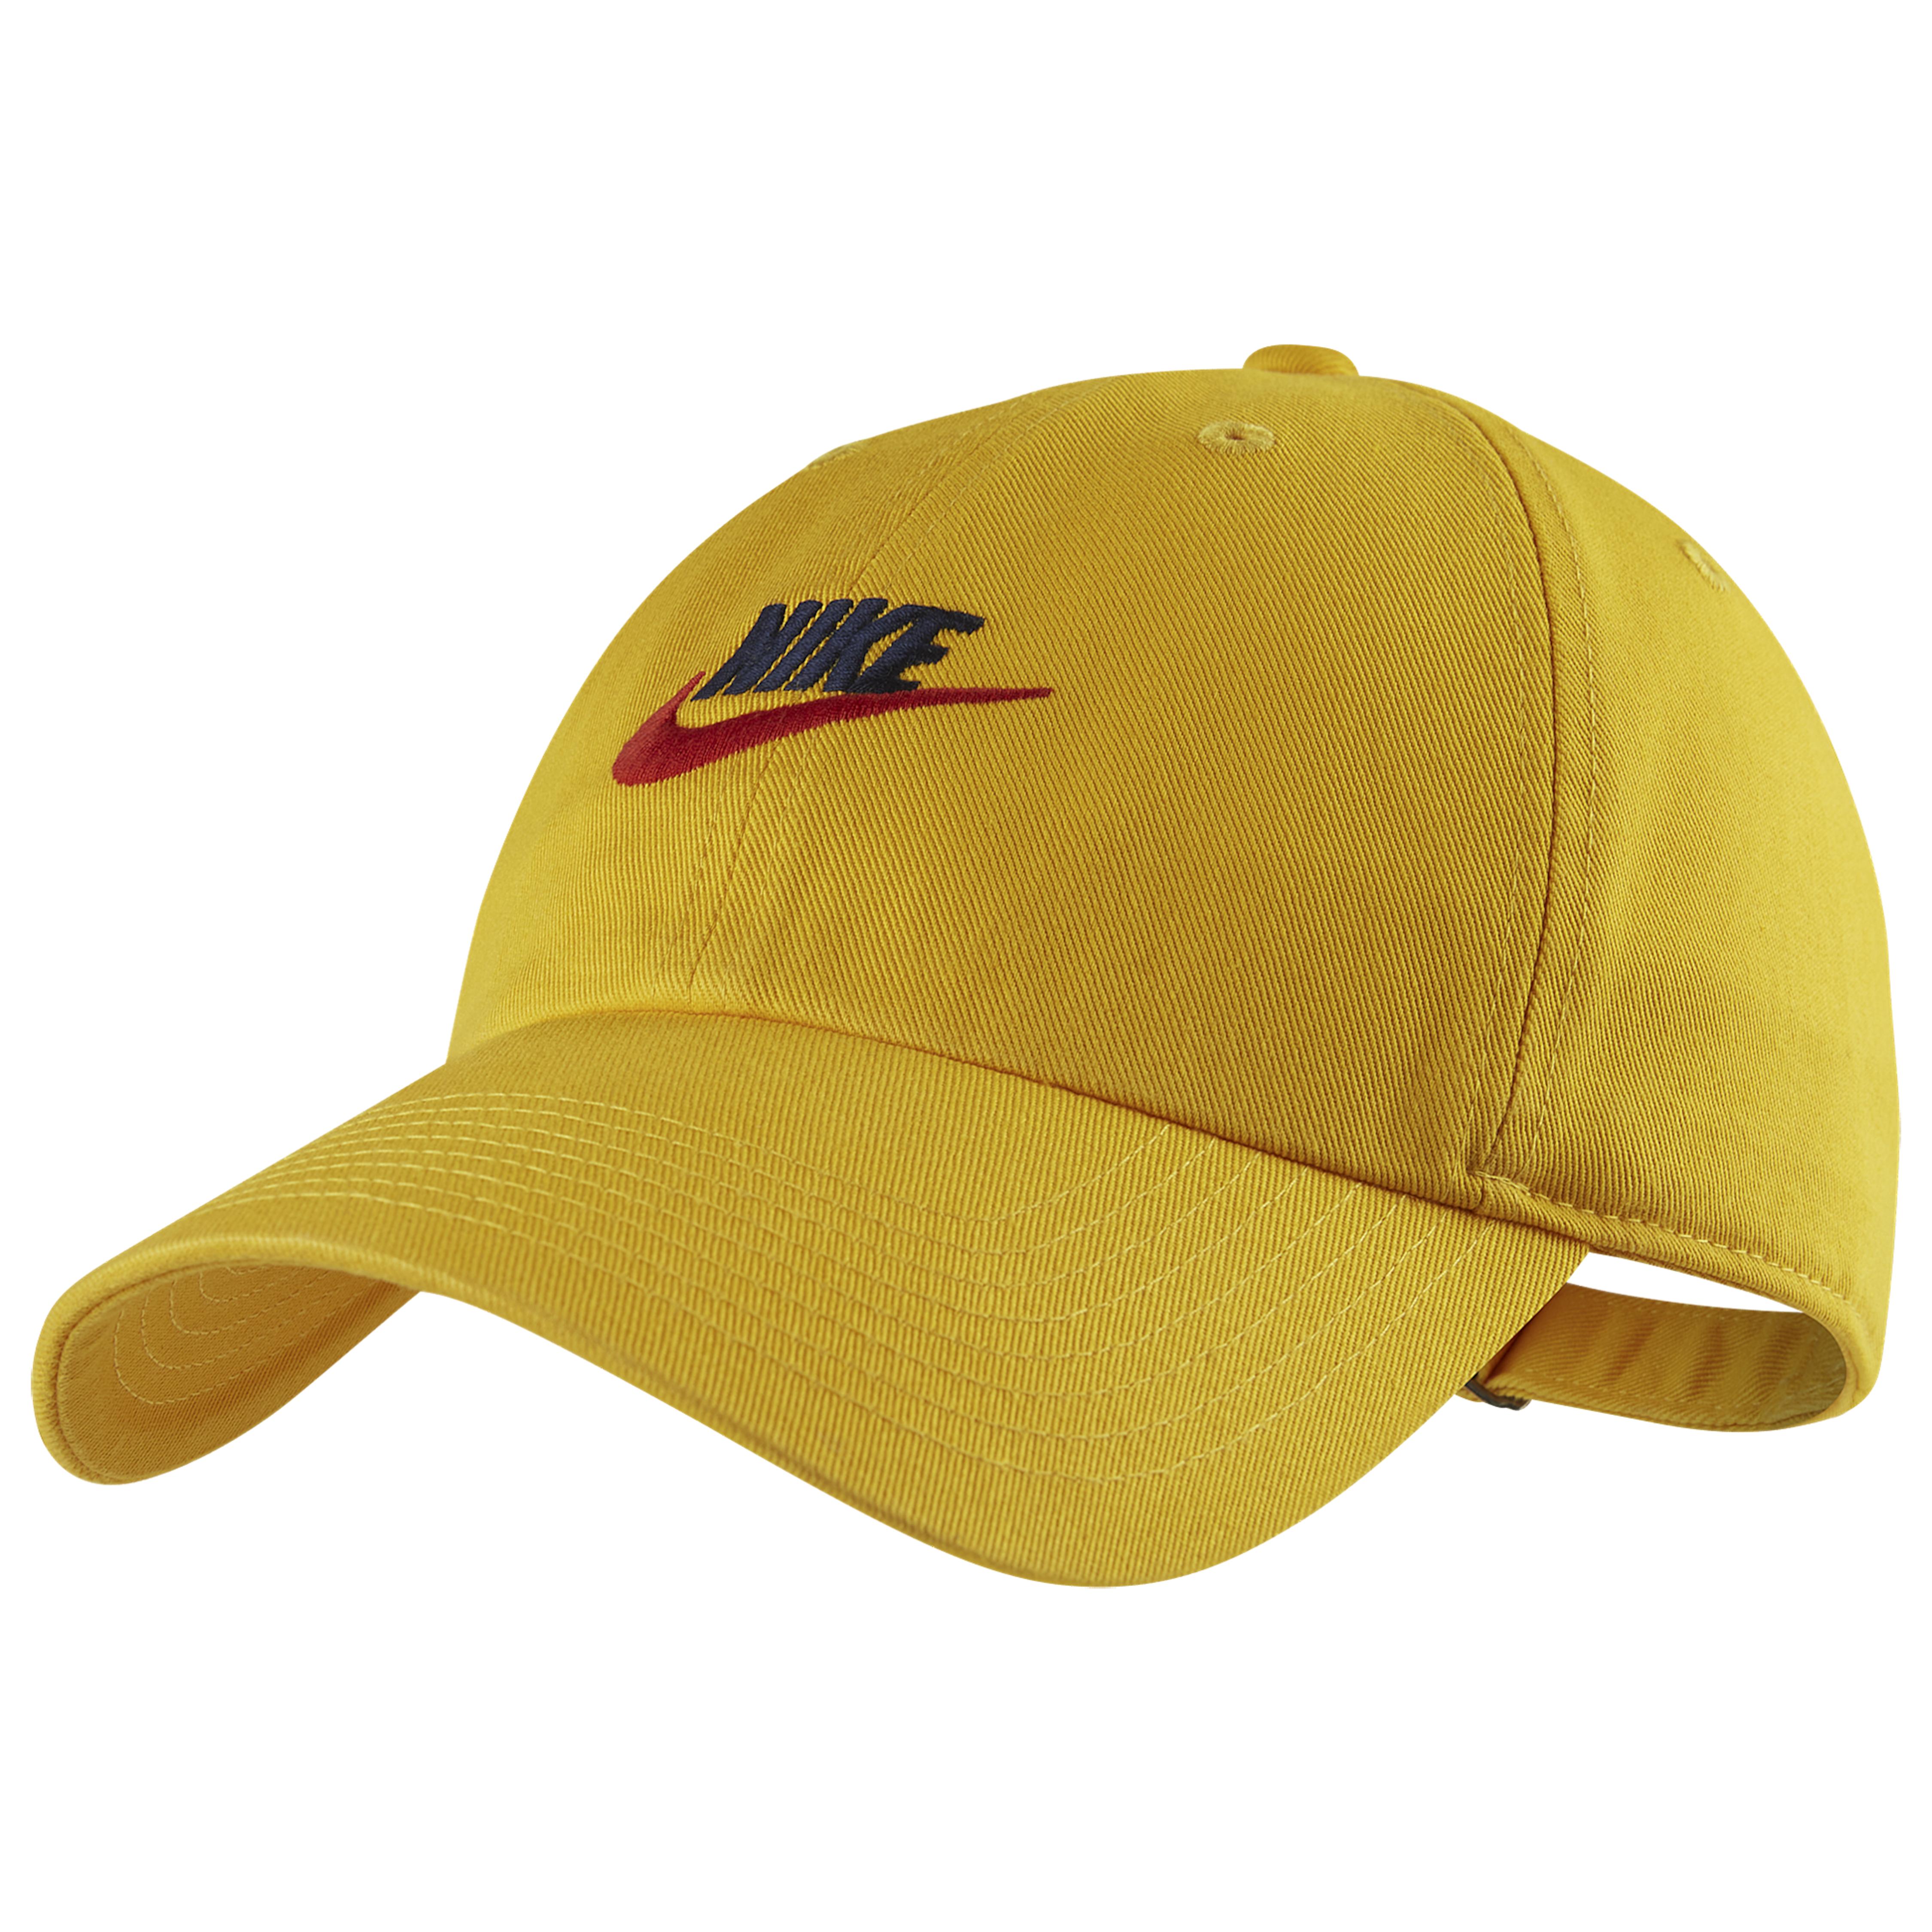 yellow nike cap